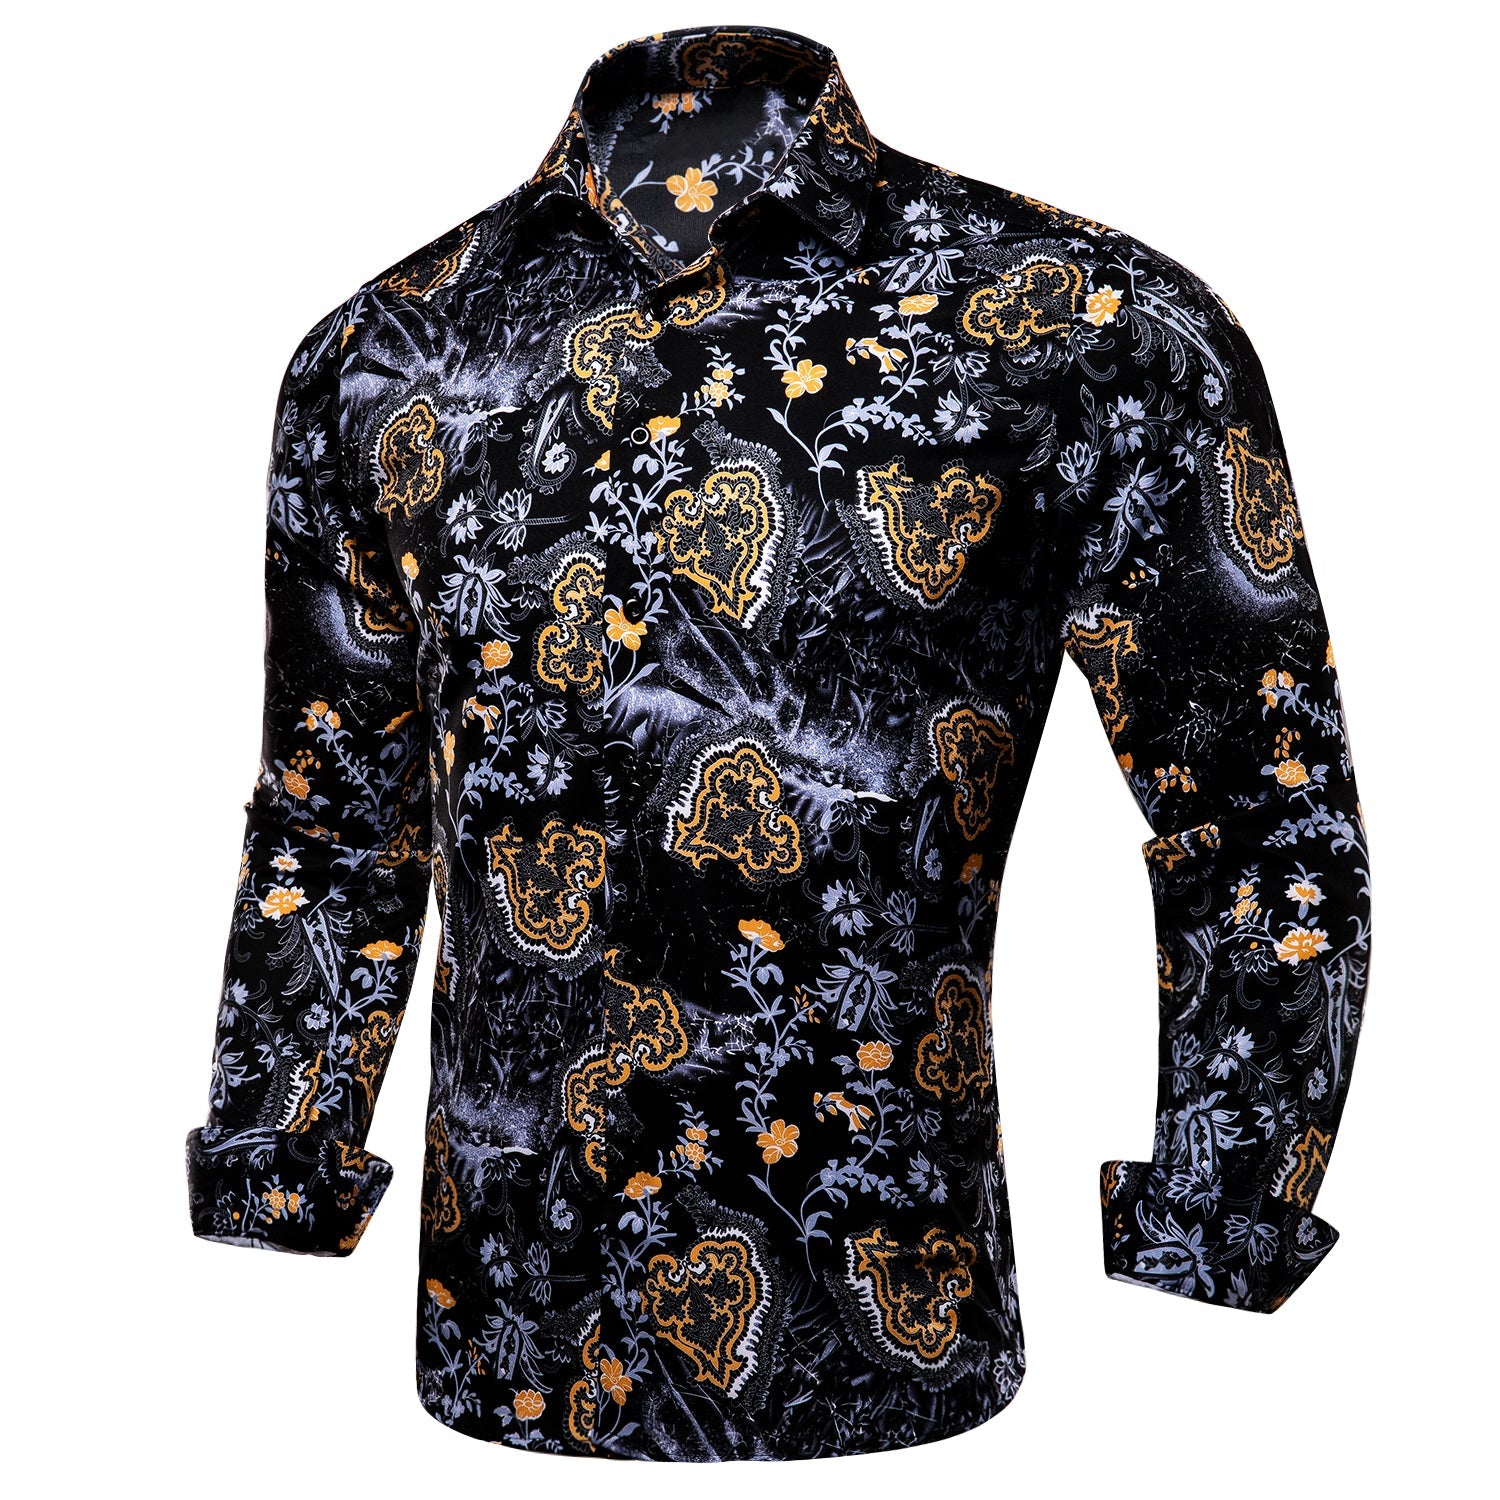 New Black Golden Flame Print Novelty Men's Shirt